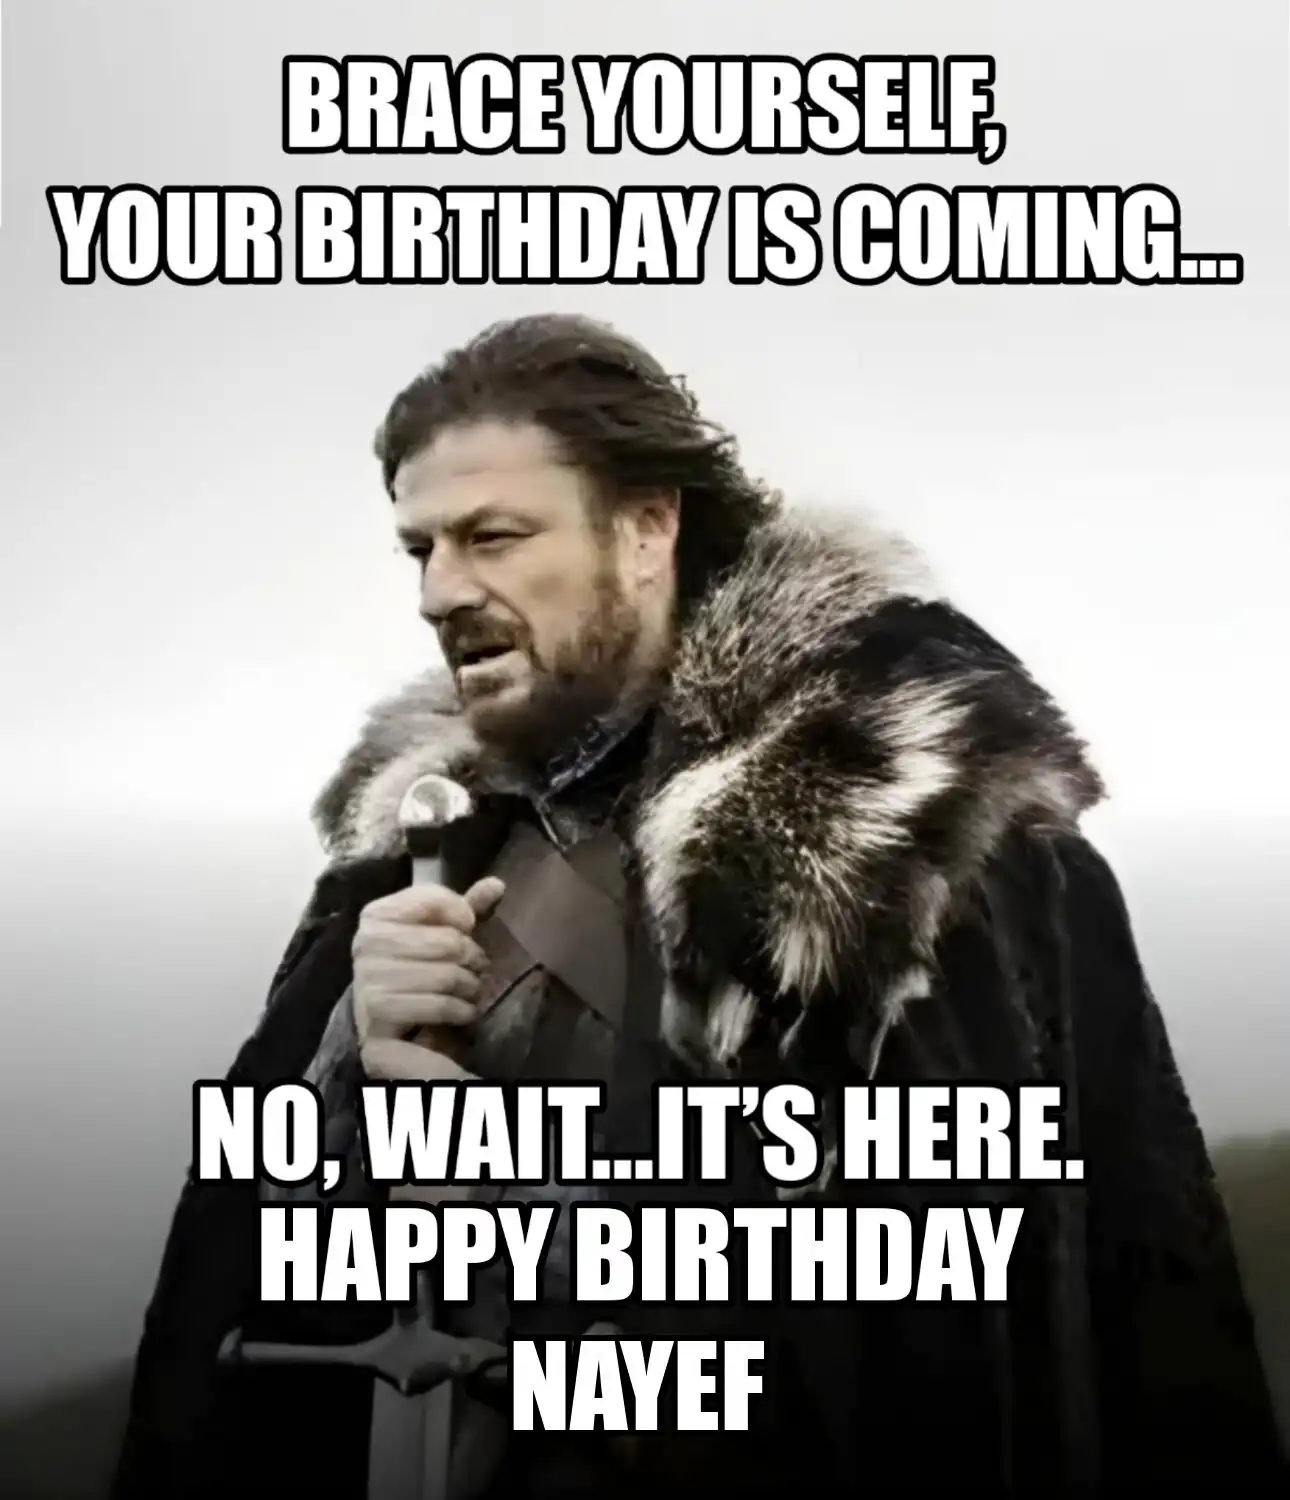 Happy Birthday Nayef Brace Yourself Your Birthday Is Coming Meme